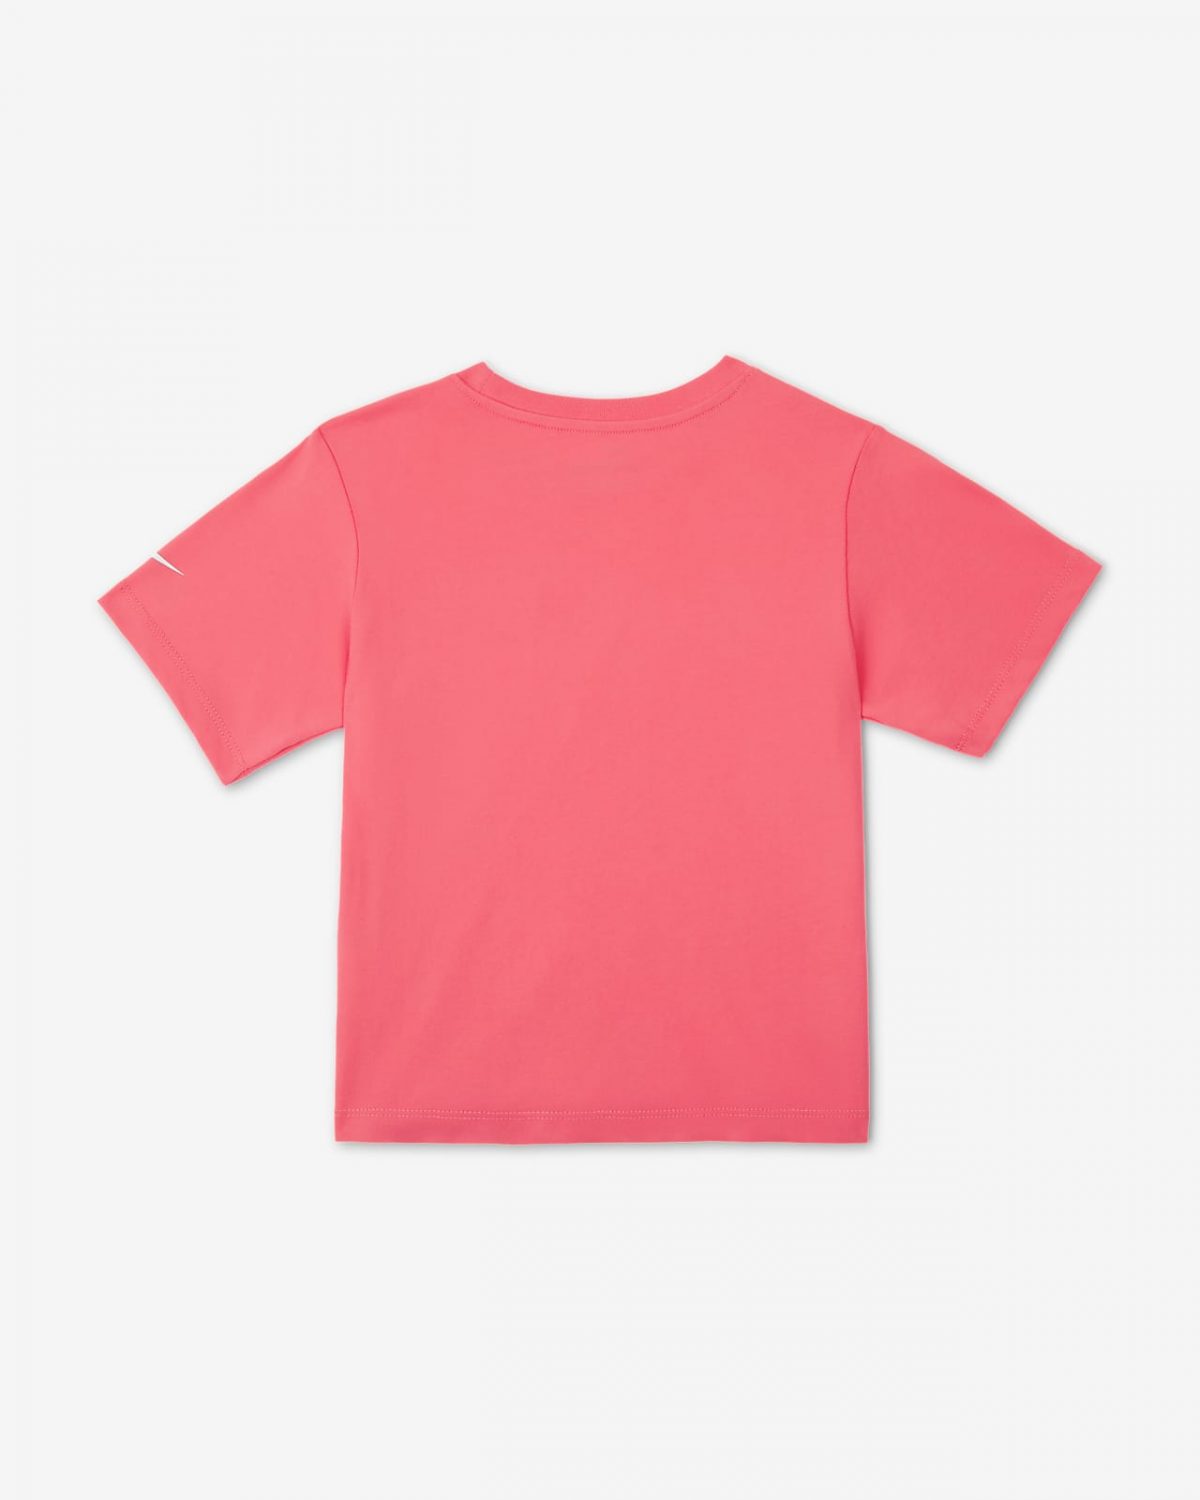 Детская футболка Nike Coral Reef Boxy фотография